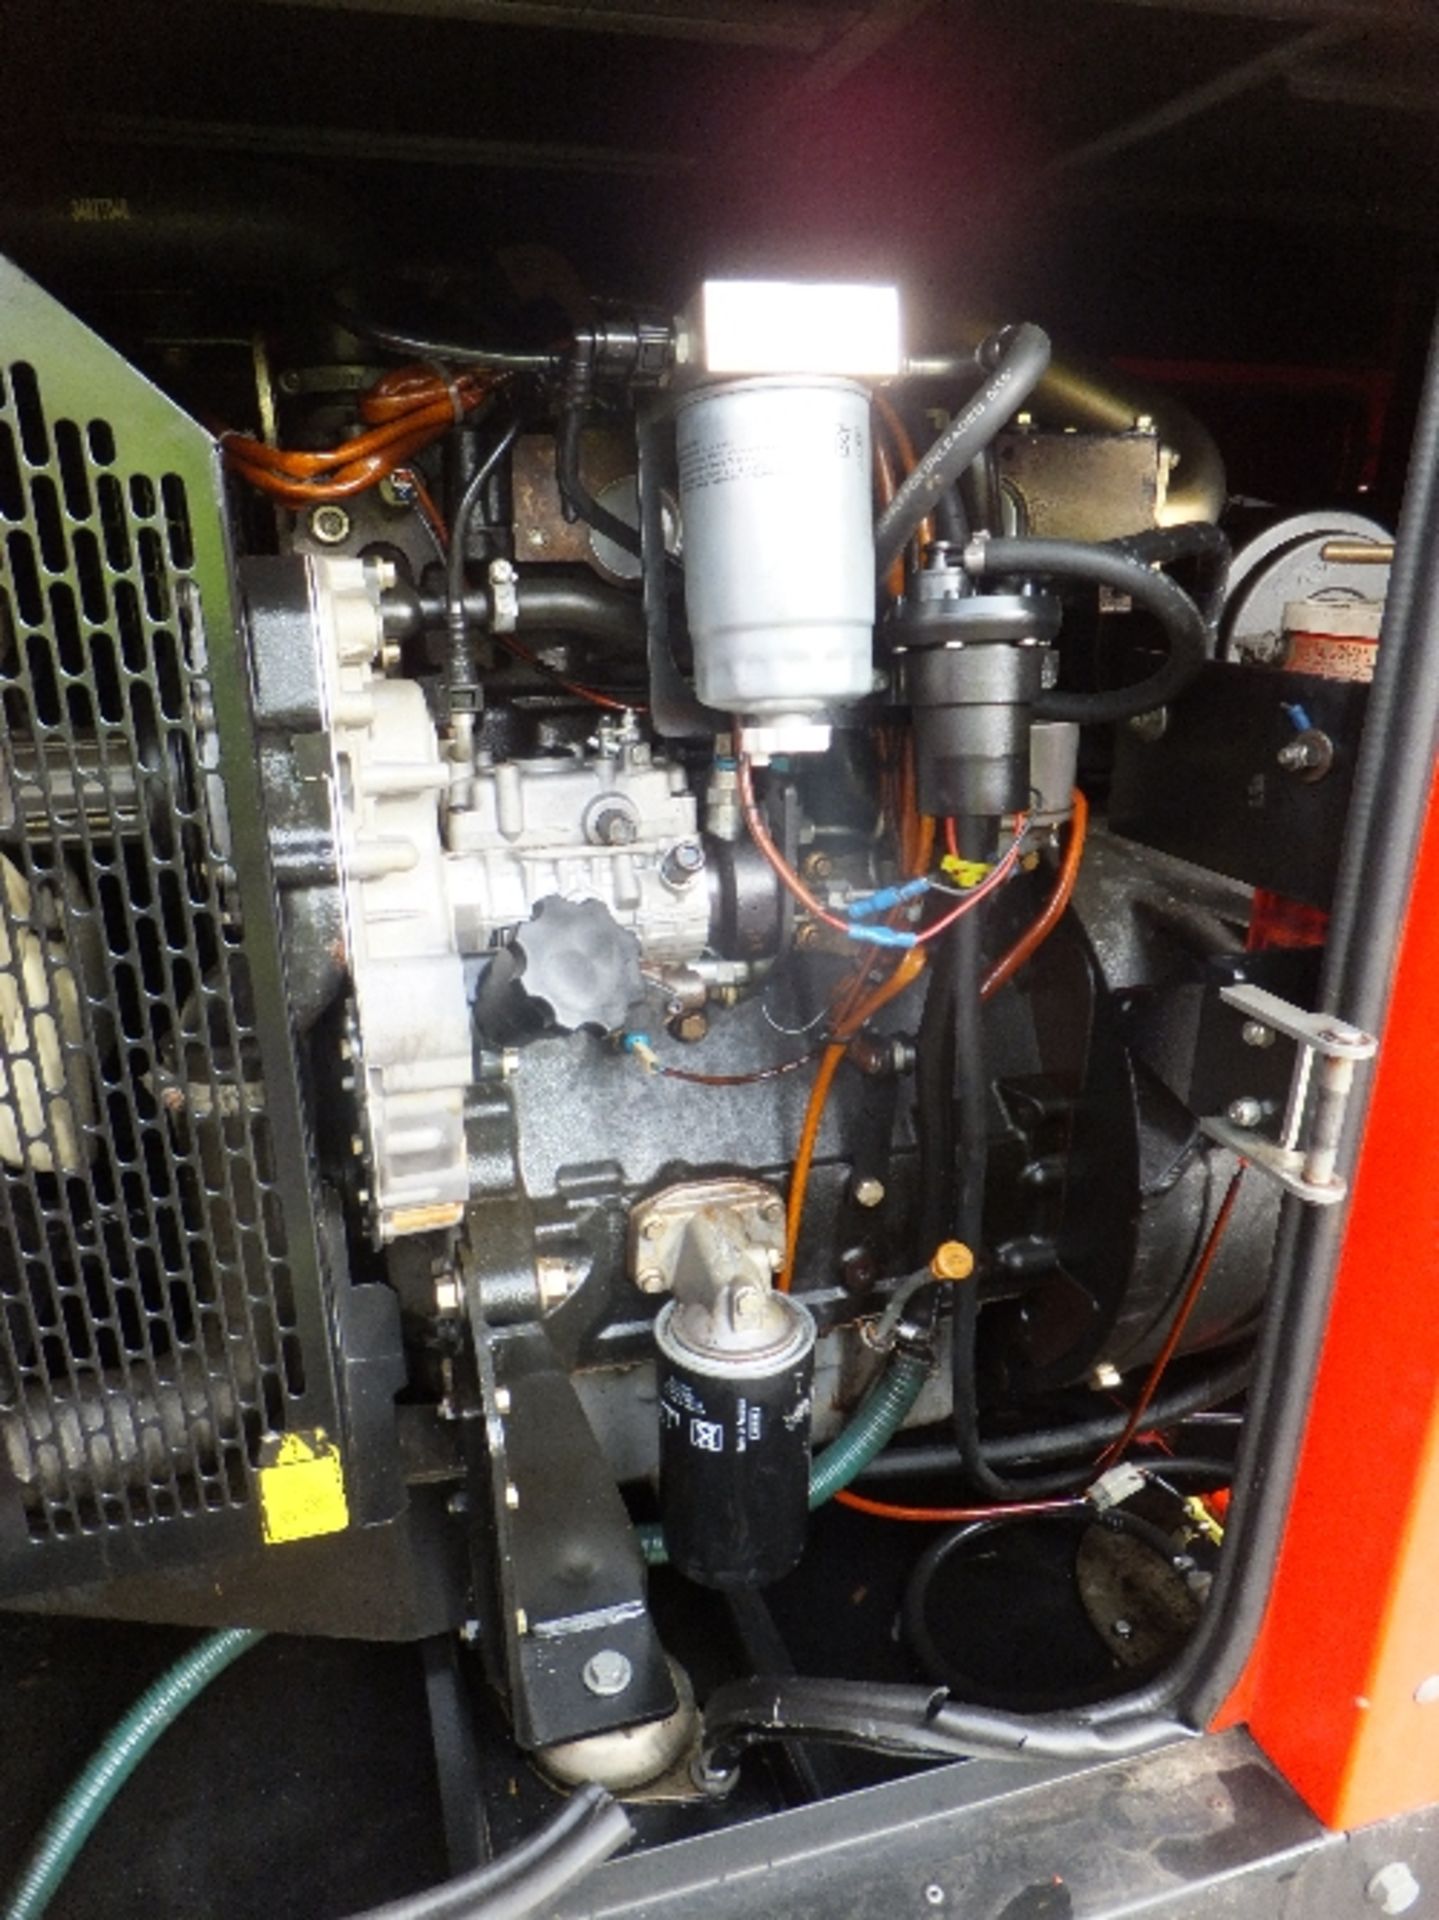 Genset MG50SS-P generator 22426 hrs RMP - Image 4 of 5